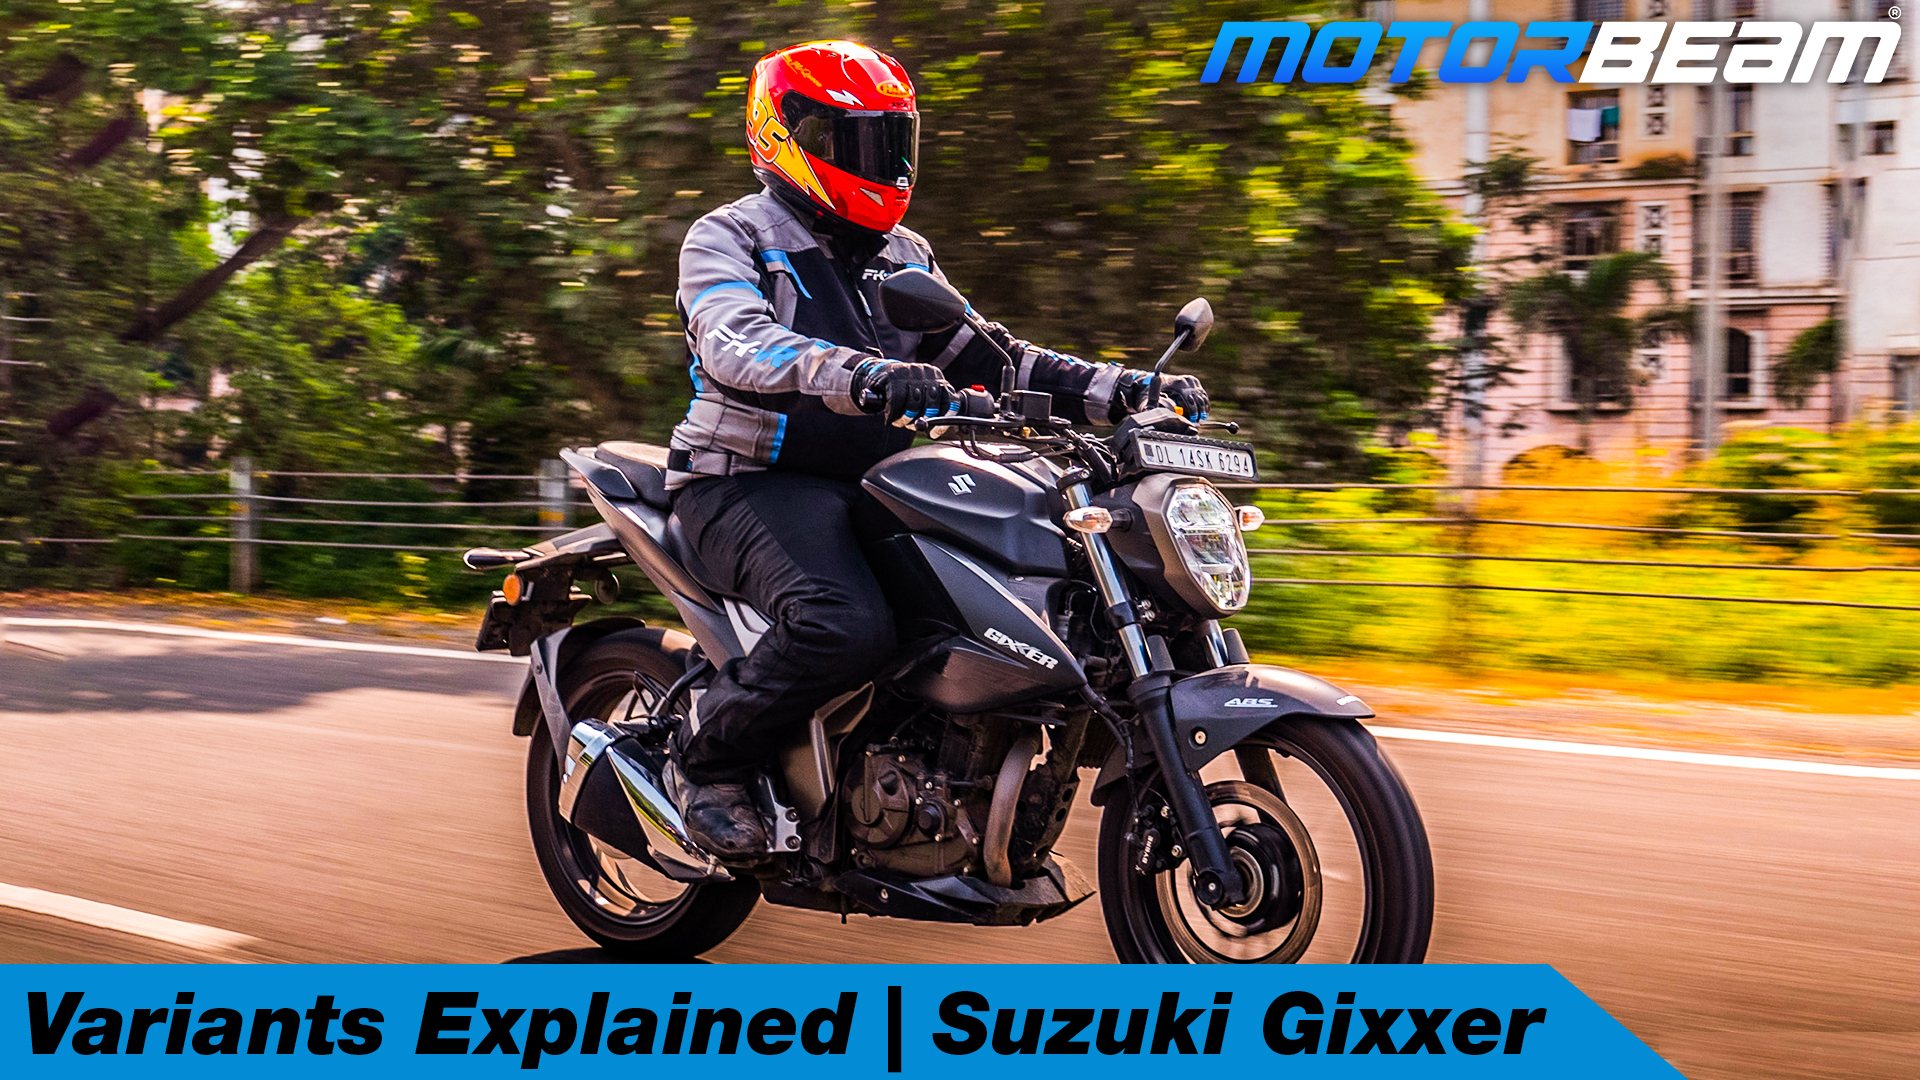 Suzuki Gixxer Variants Explained